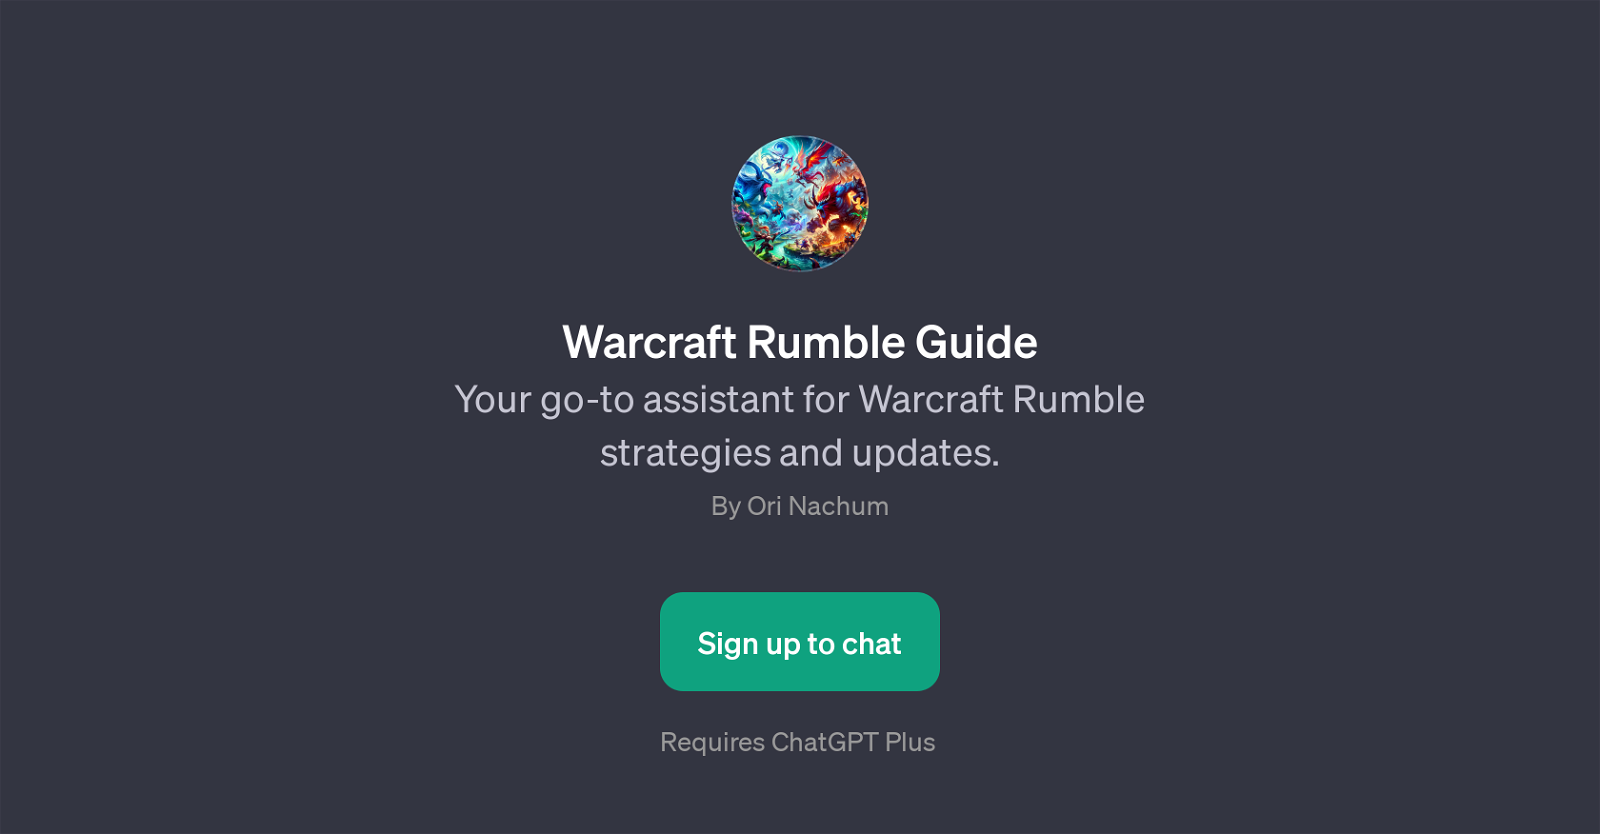 Warcraft Rumble Guide website